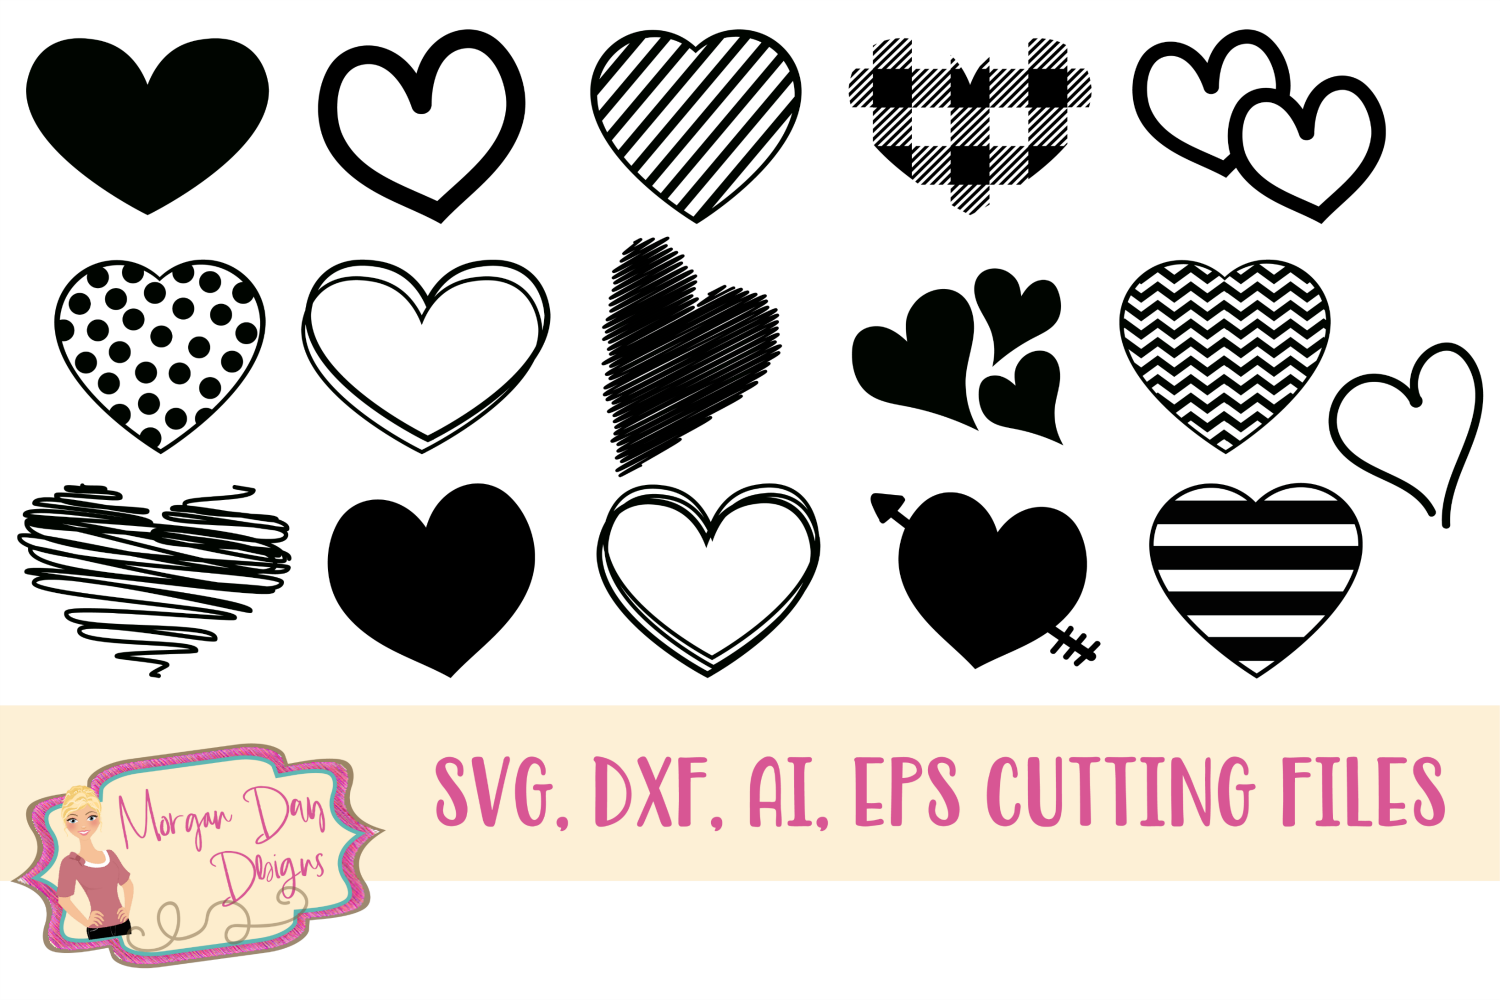 Heart Doodles SVG, DXF, AI, EPS, PNG, JPEG